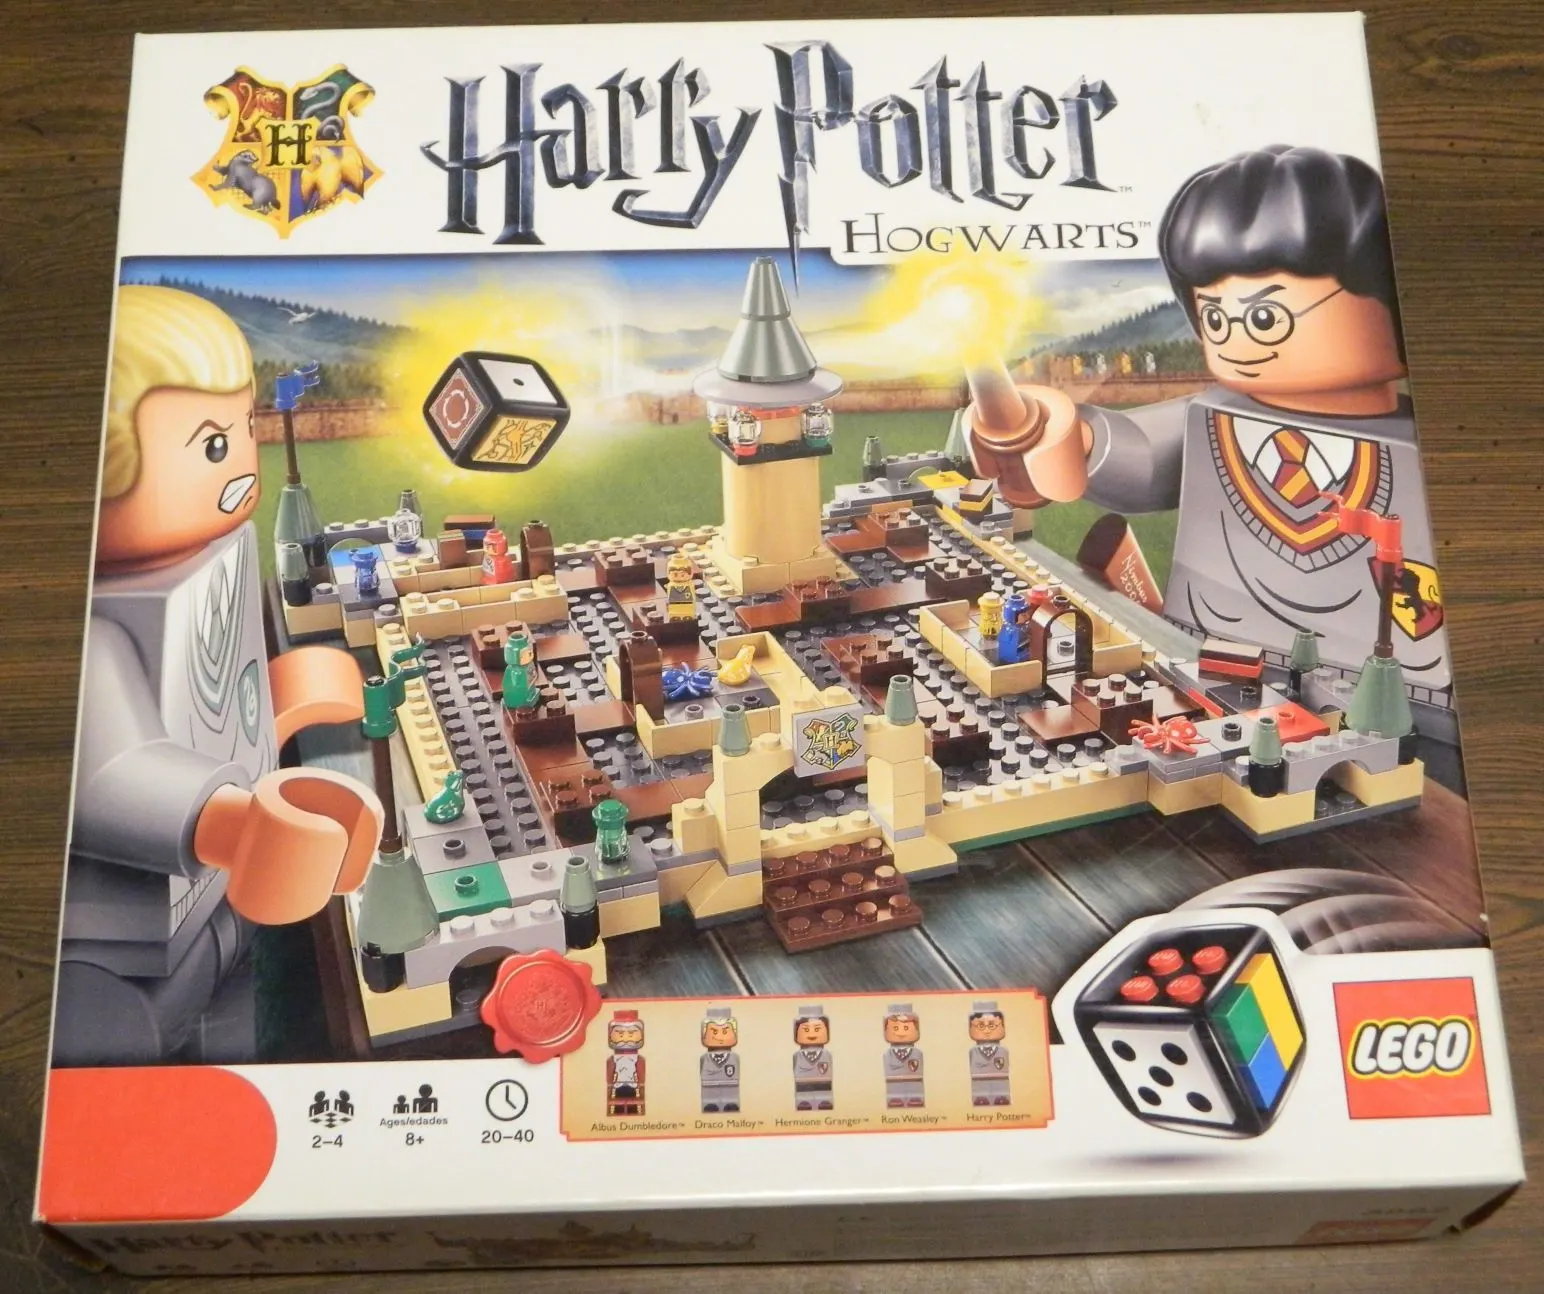 Box for LEGO Harry Potter Hogwarts